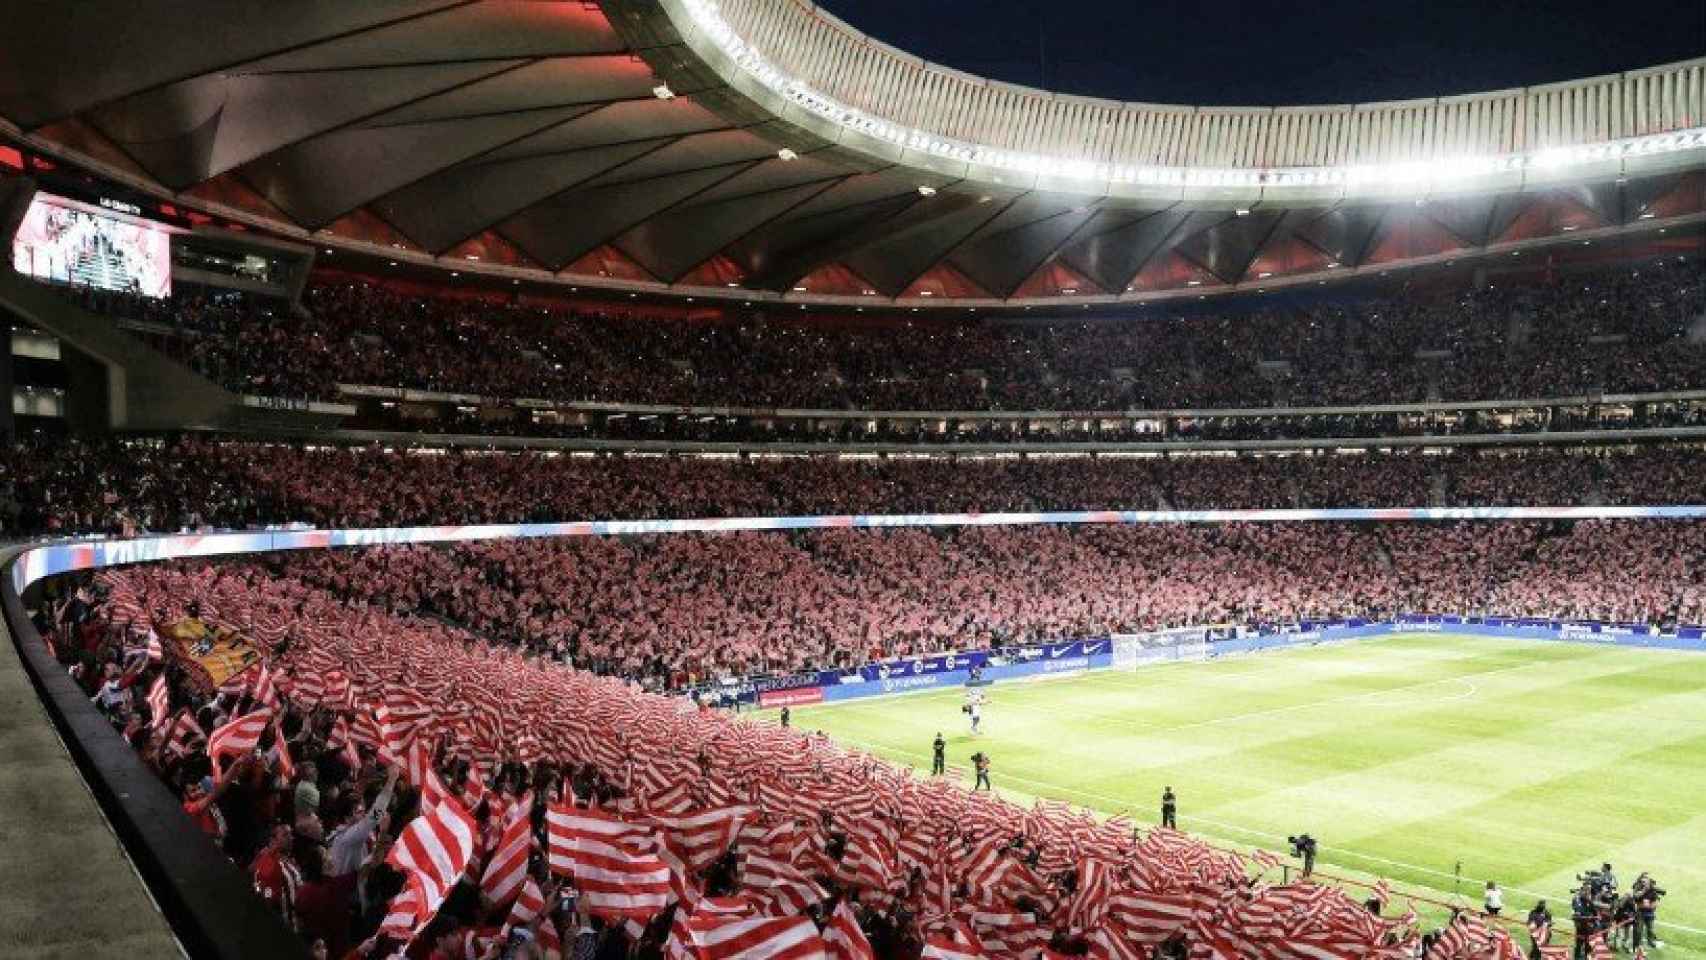 El Wanda Metropolitano abre sus puertas. Foto Twitter (@Atleti)